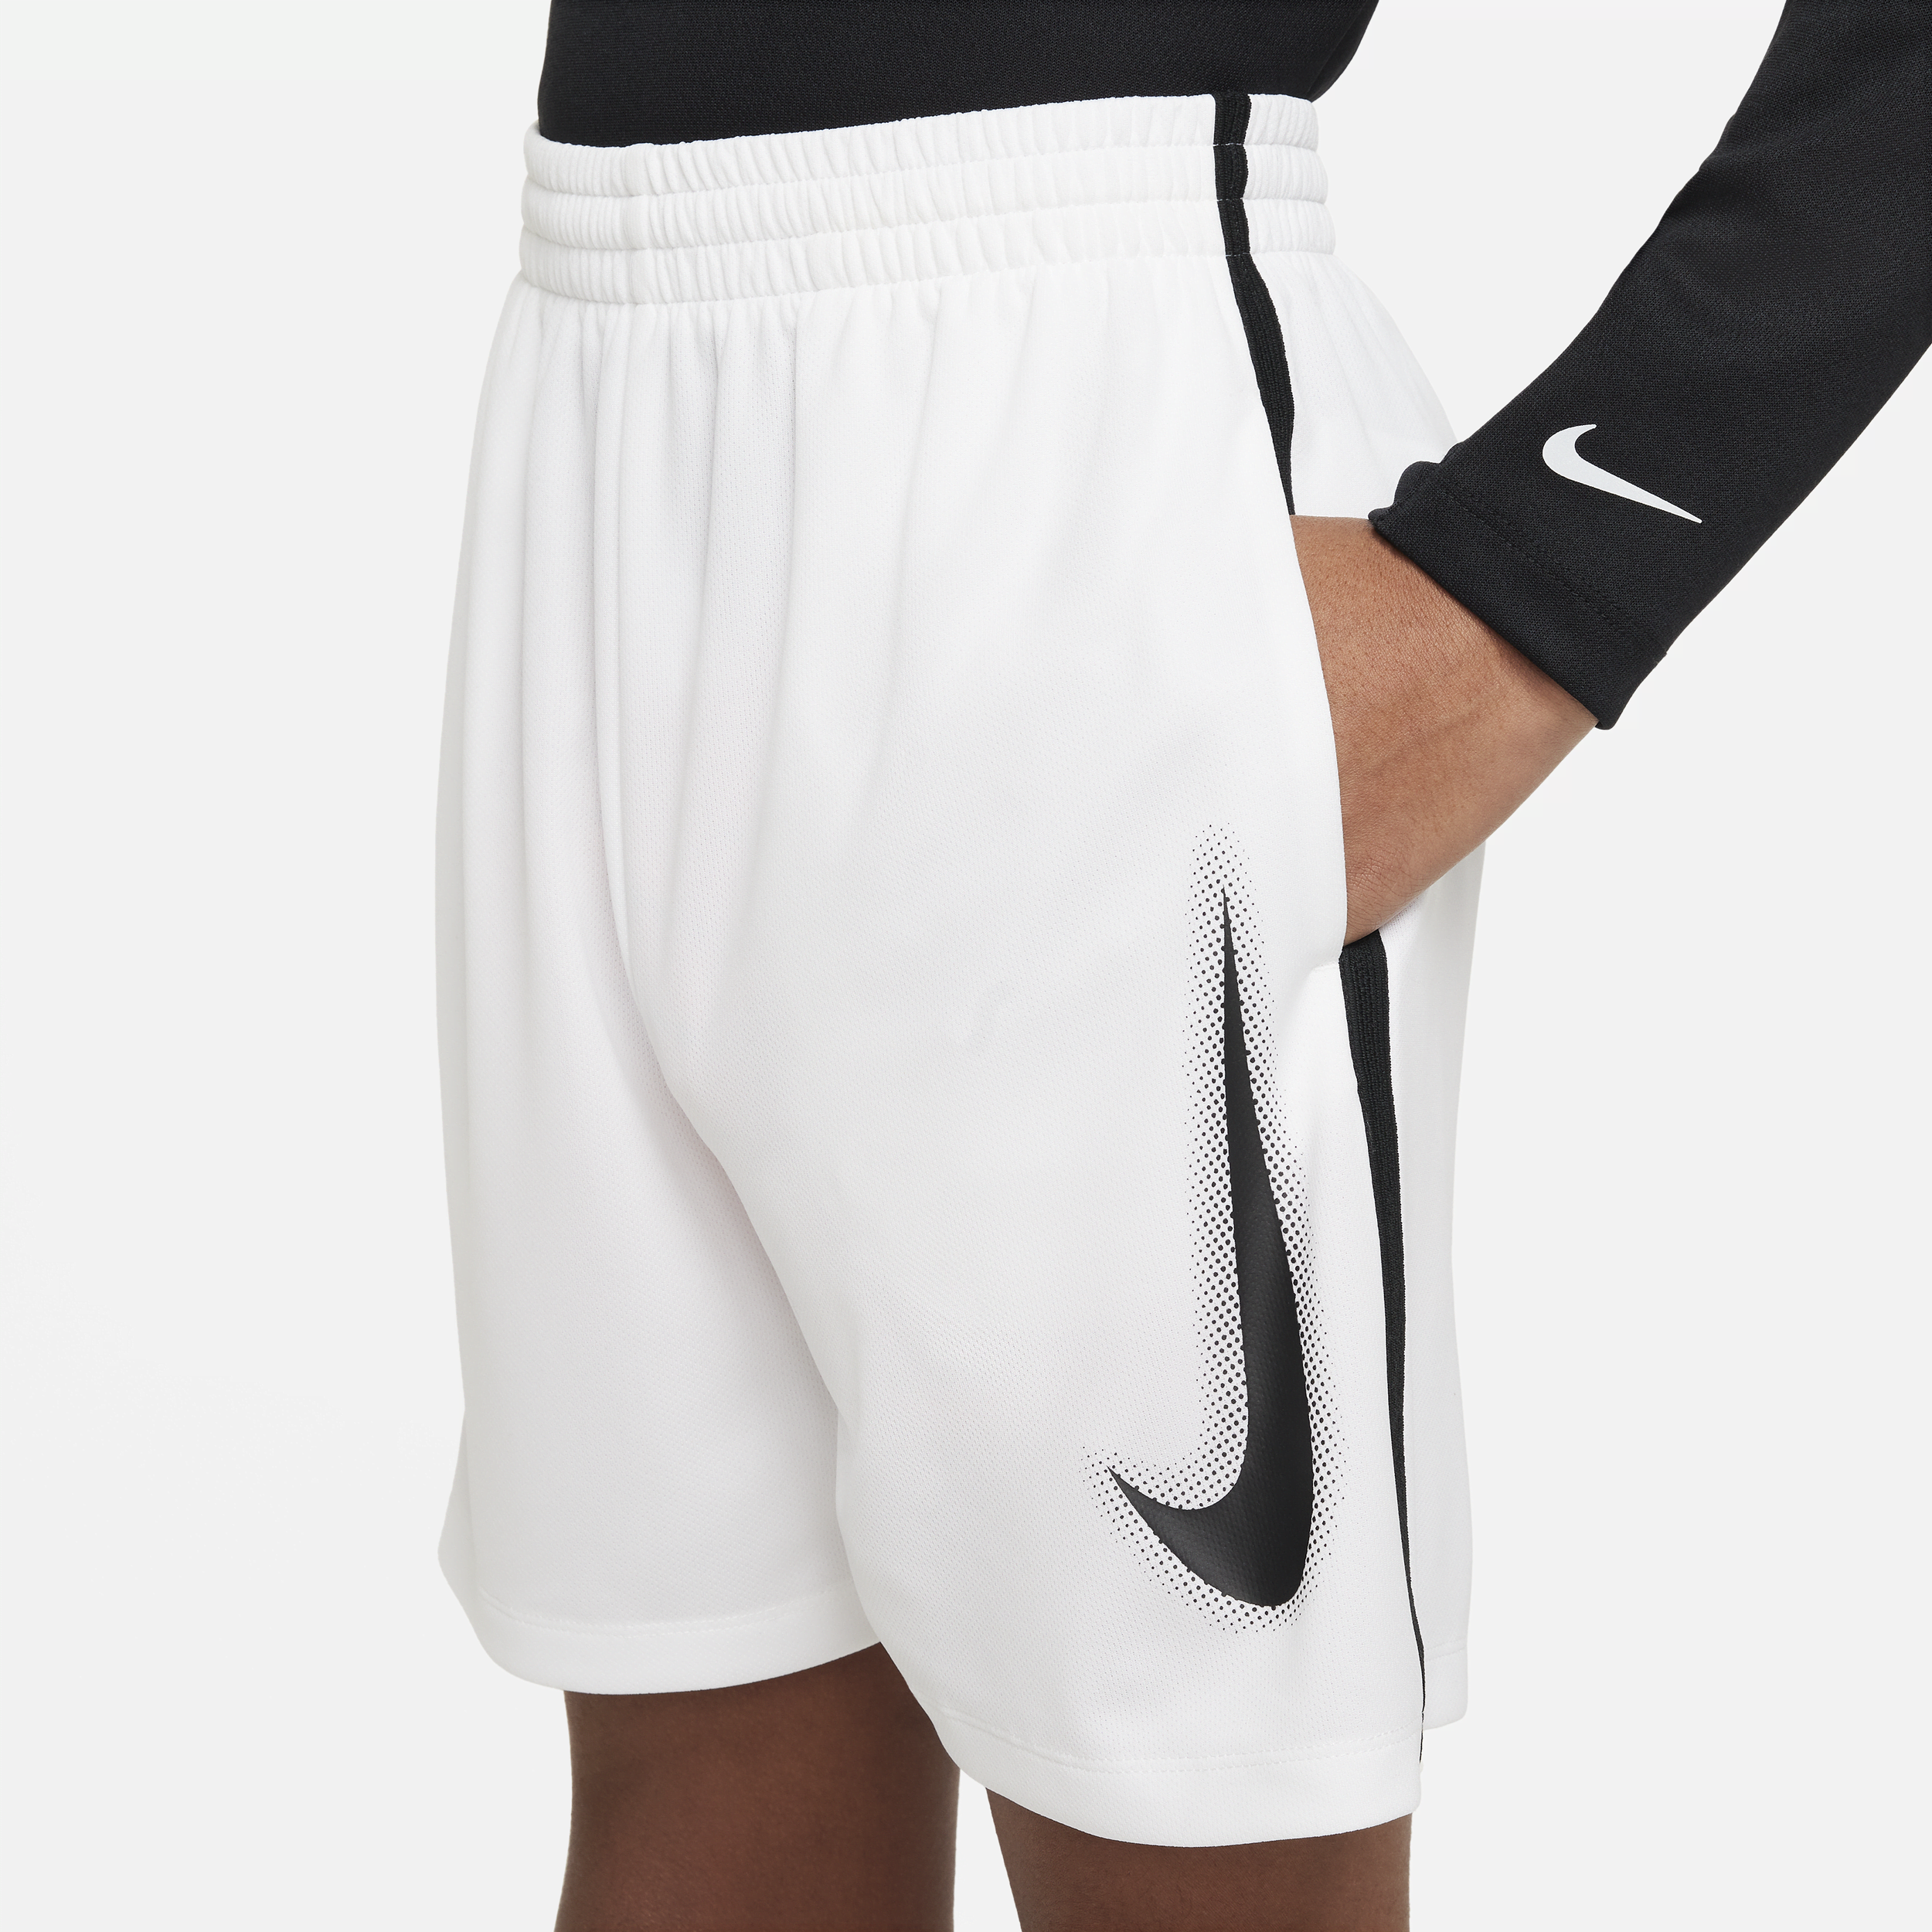 Nike Multi Dri-FIT trainingsshorts met graphic voor jongens Wit